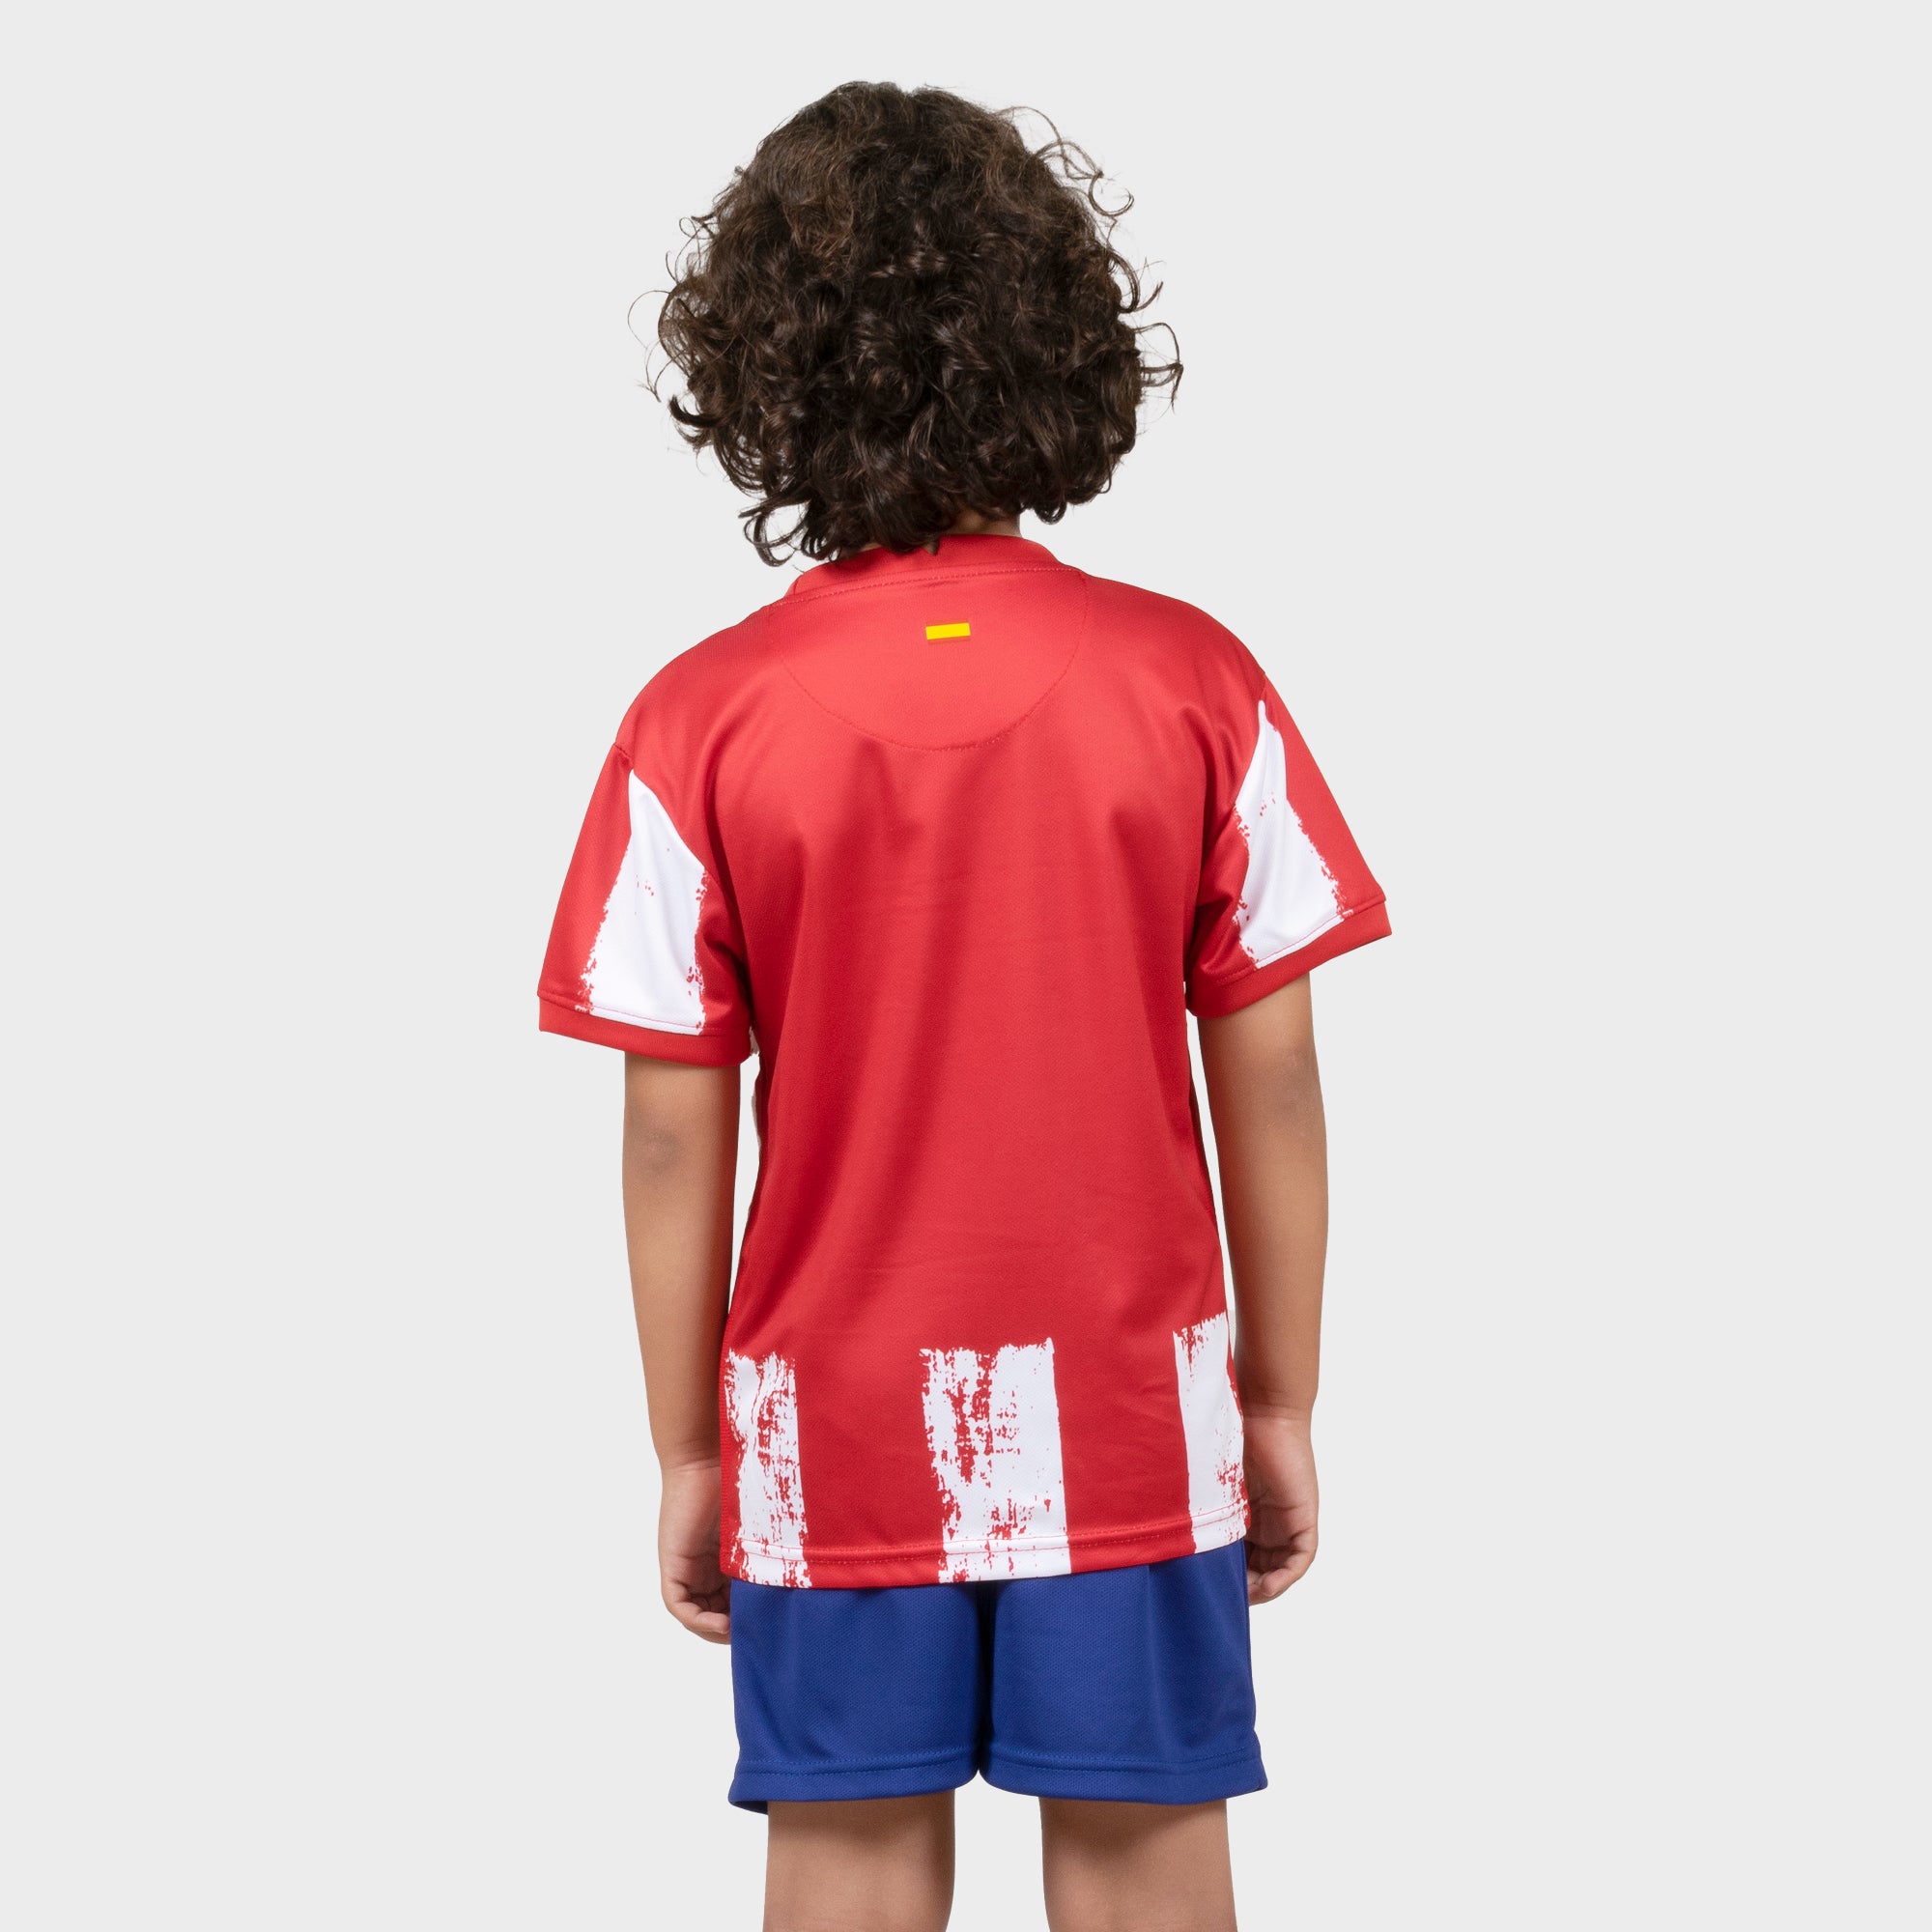 Dhestia Home - Camiseta Atlético de Madrid para Niños Indi - Rojo, 122-128  cm